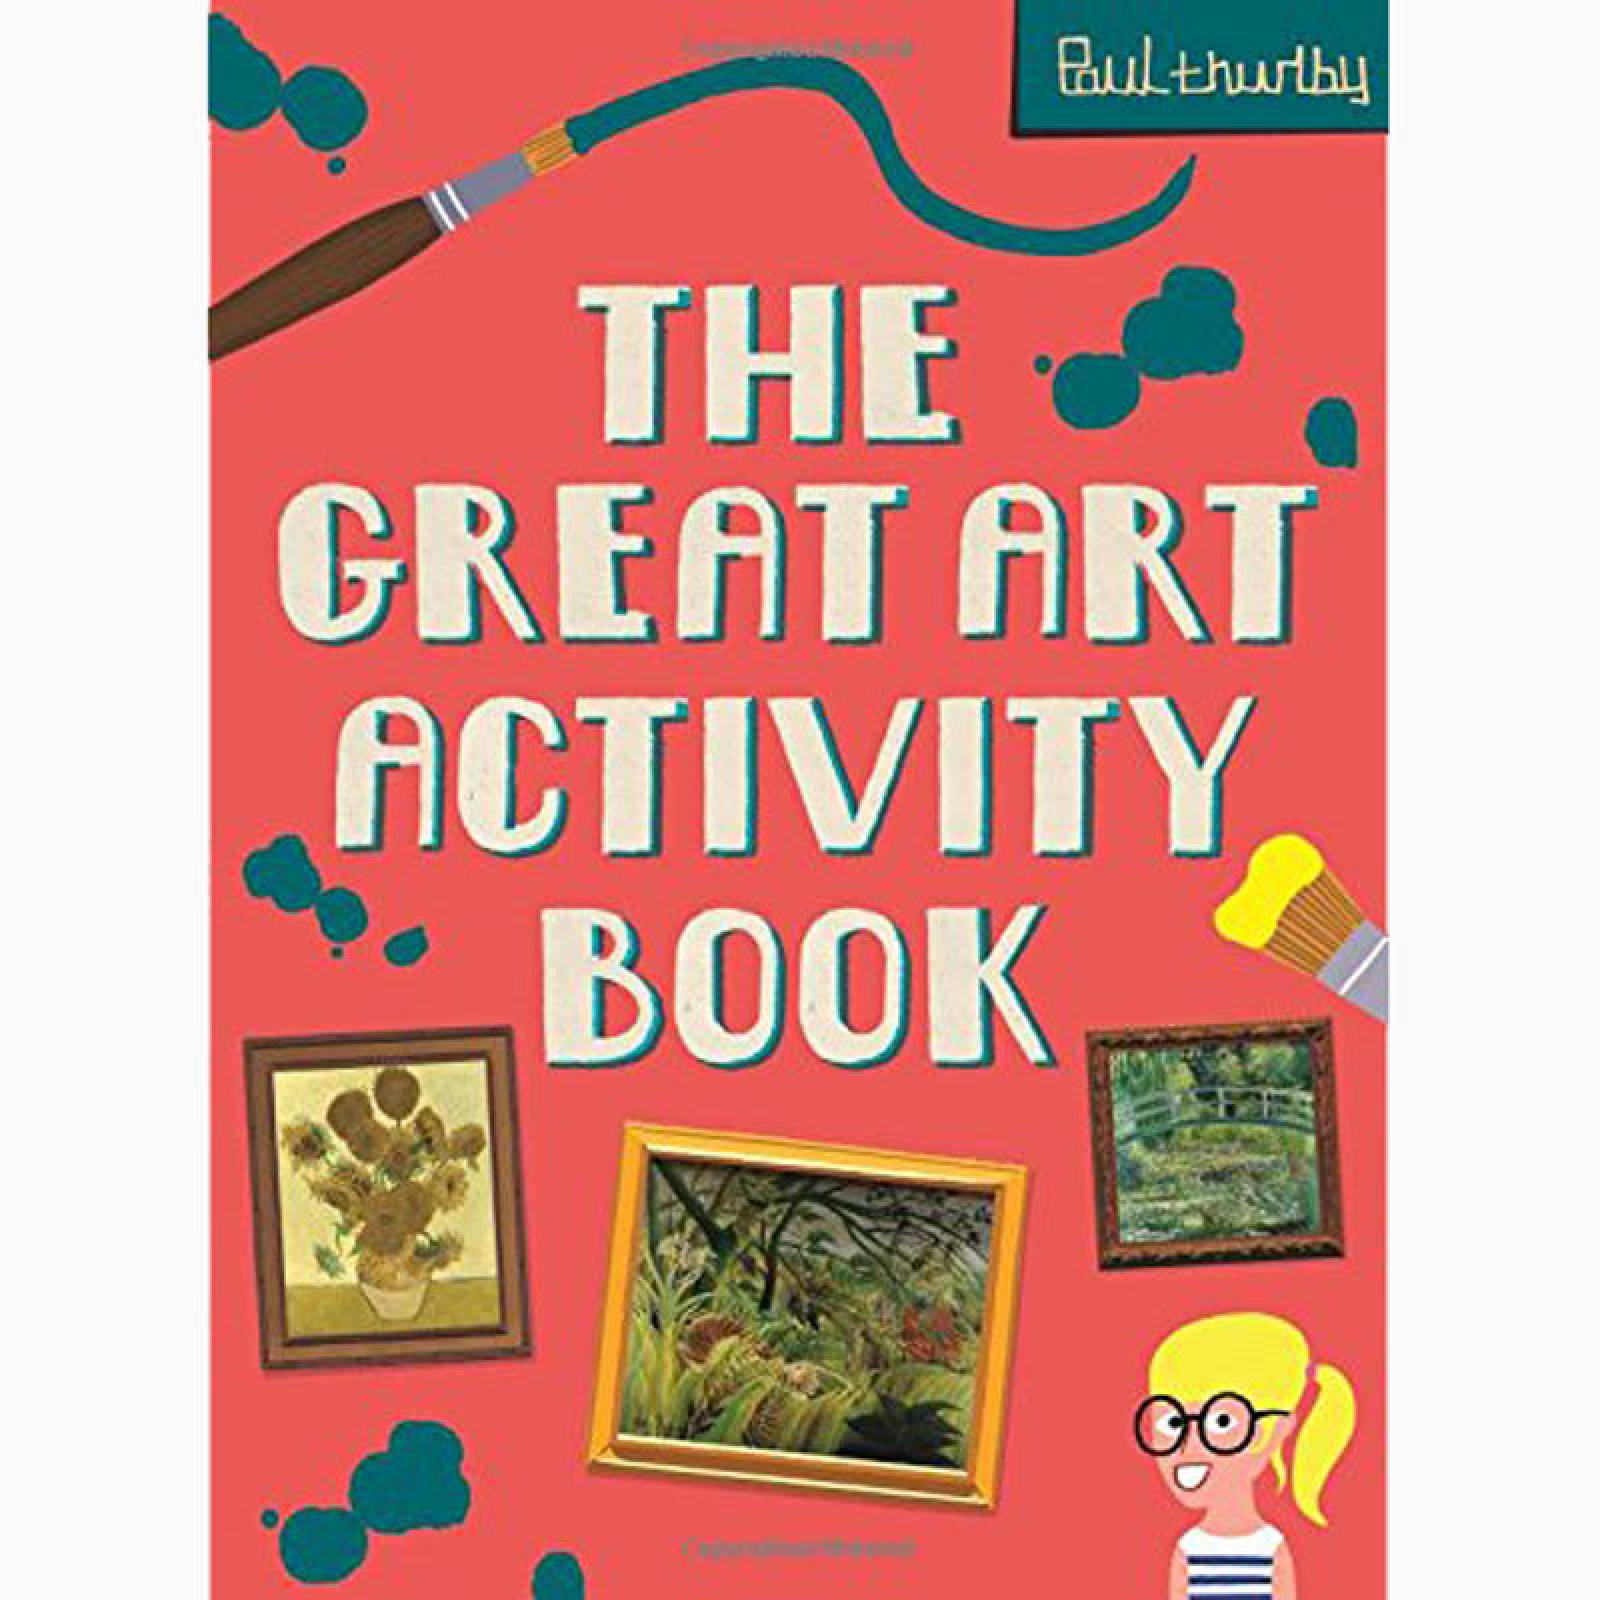 The Great Art Activity Book thumbnails